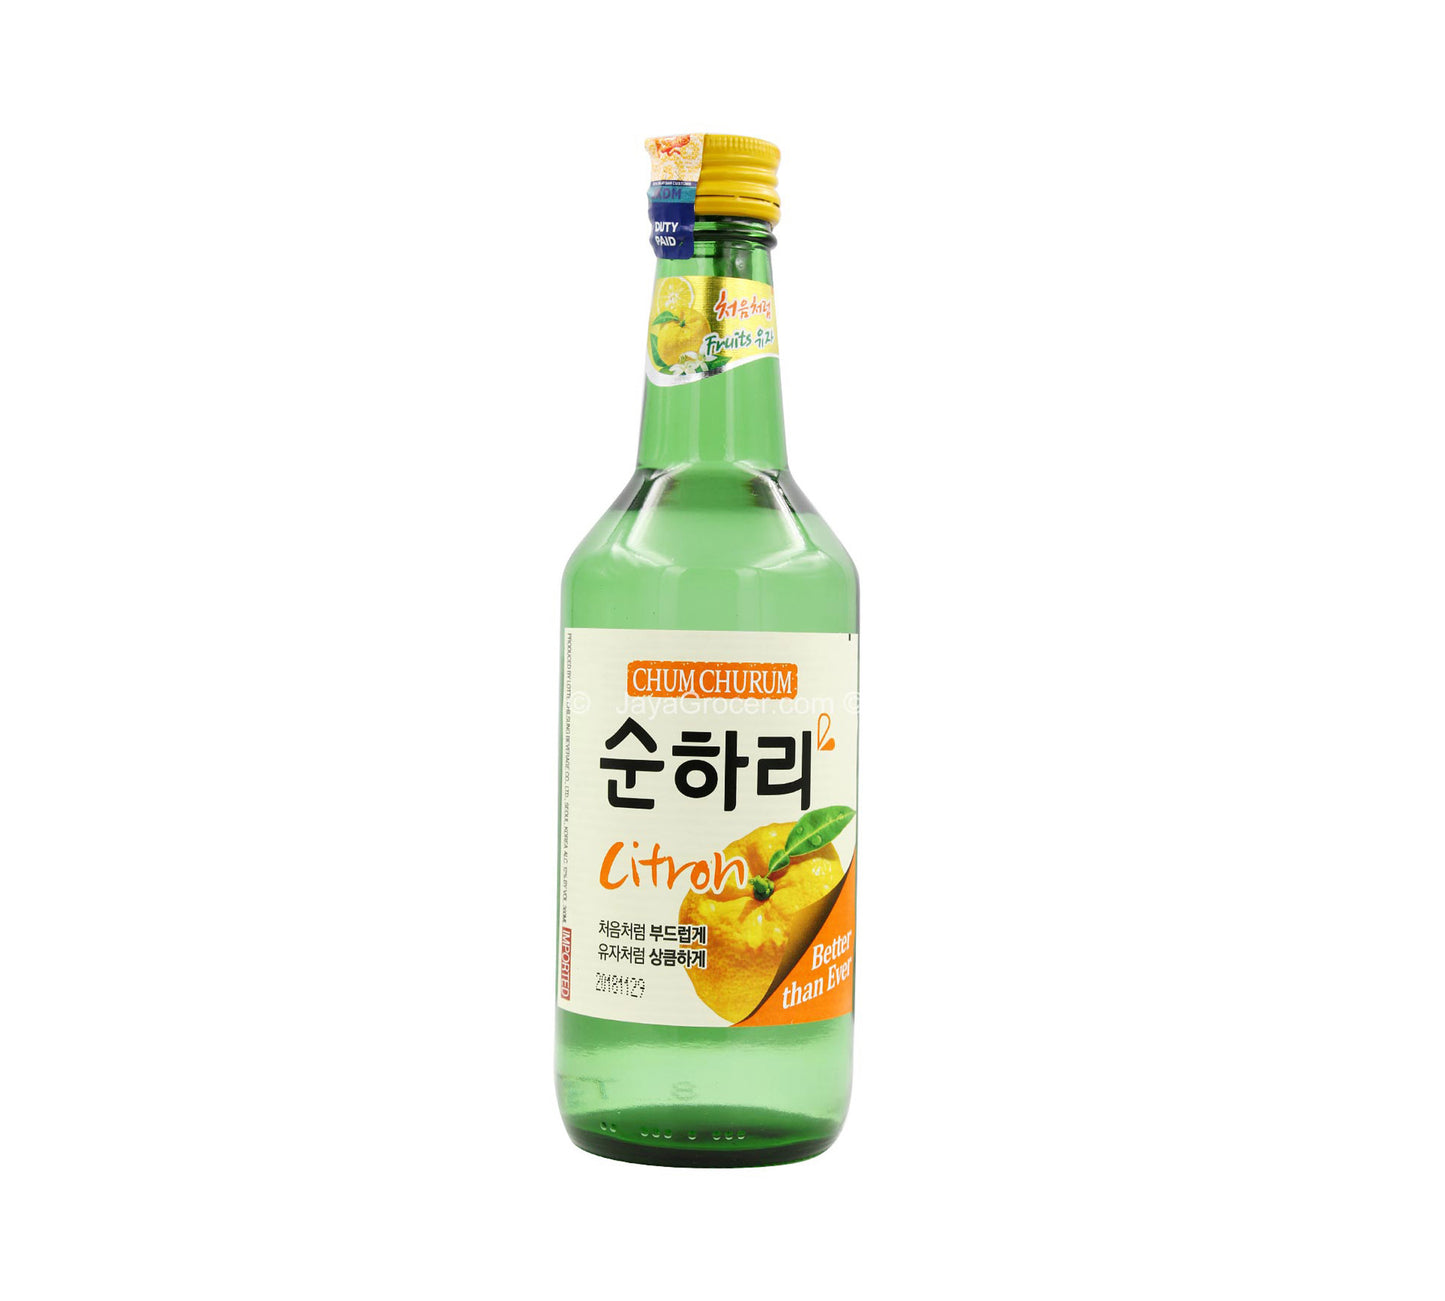 Lotte Chum Churum Soju Citron (Yuzu) Flavour 12% (360 ml)